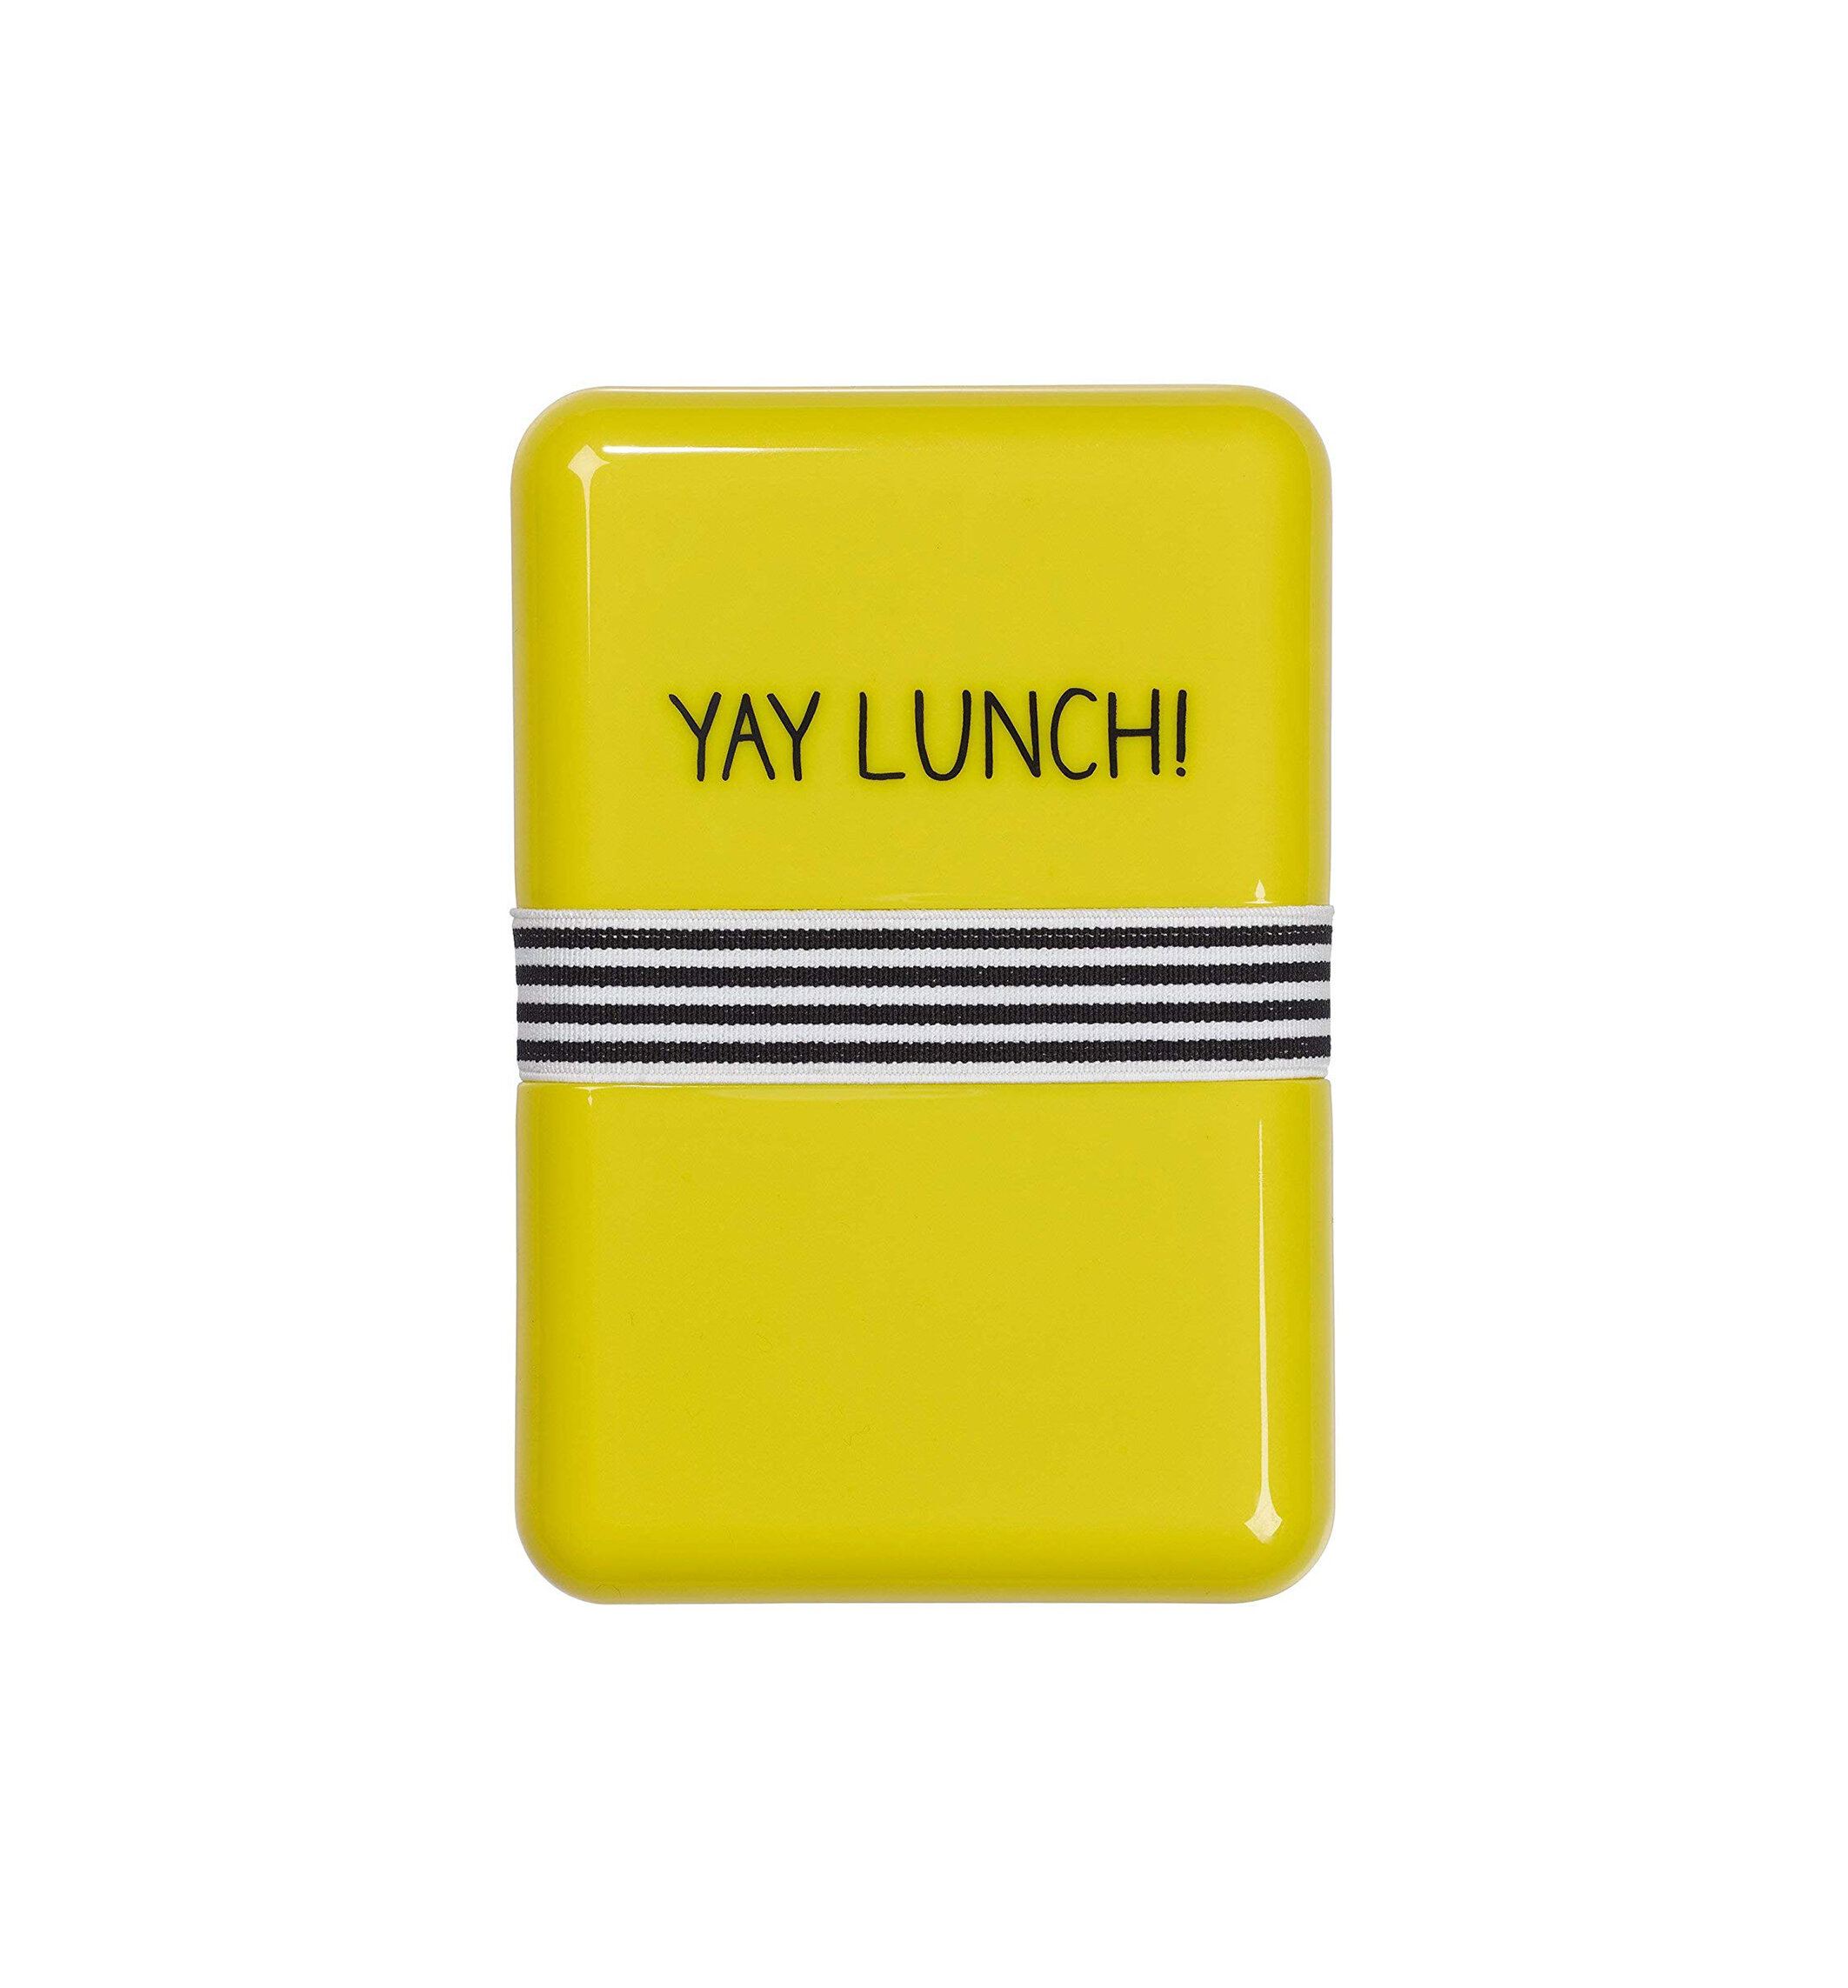 happy-jackson-lunch-box.jpg